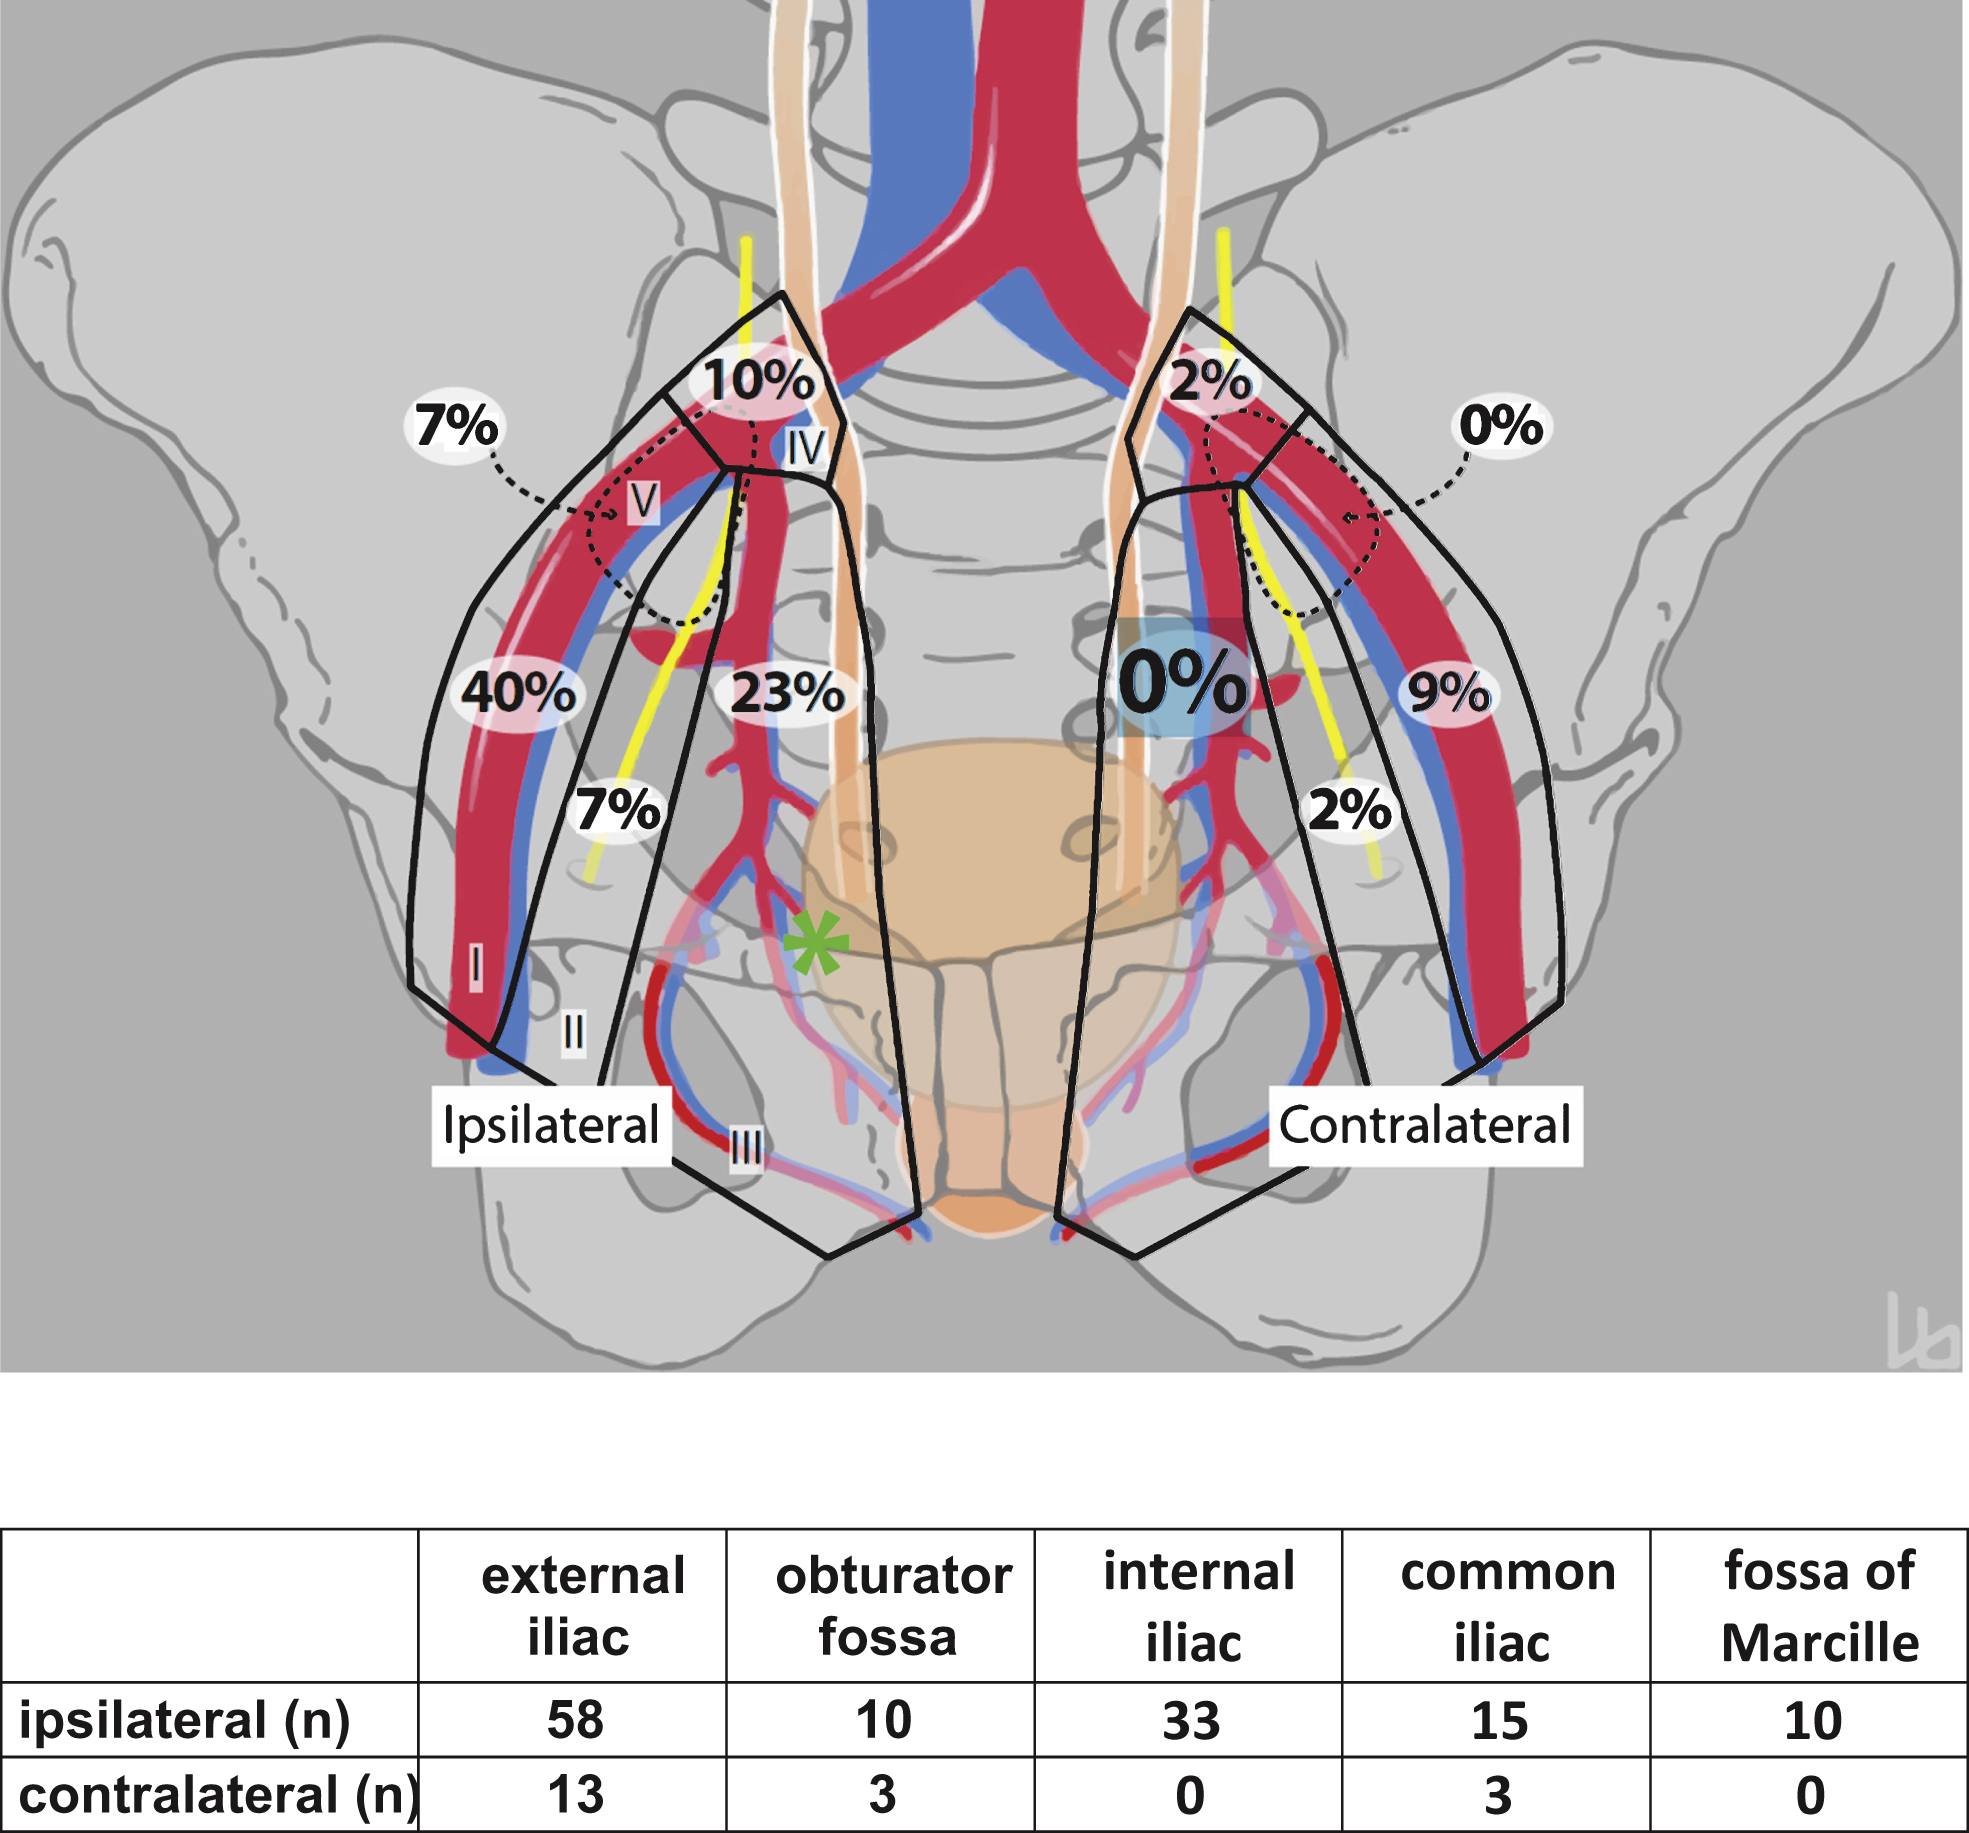 Ipsilateral lymph nodes